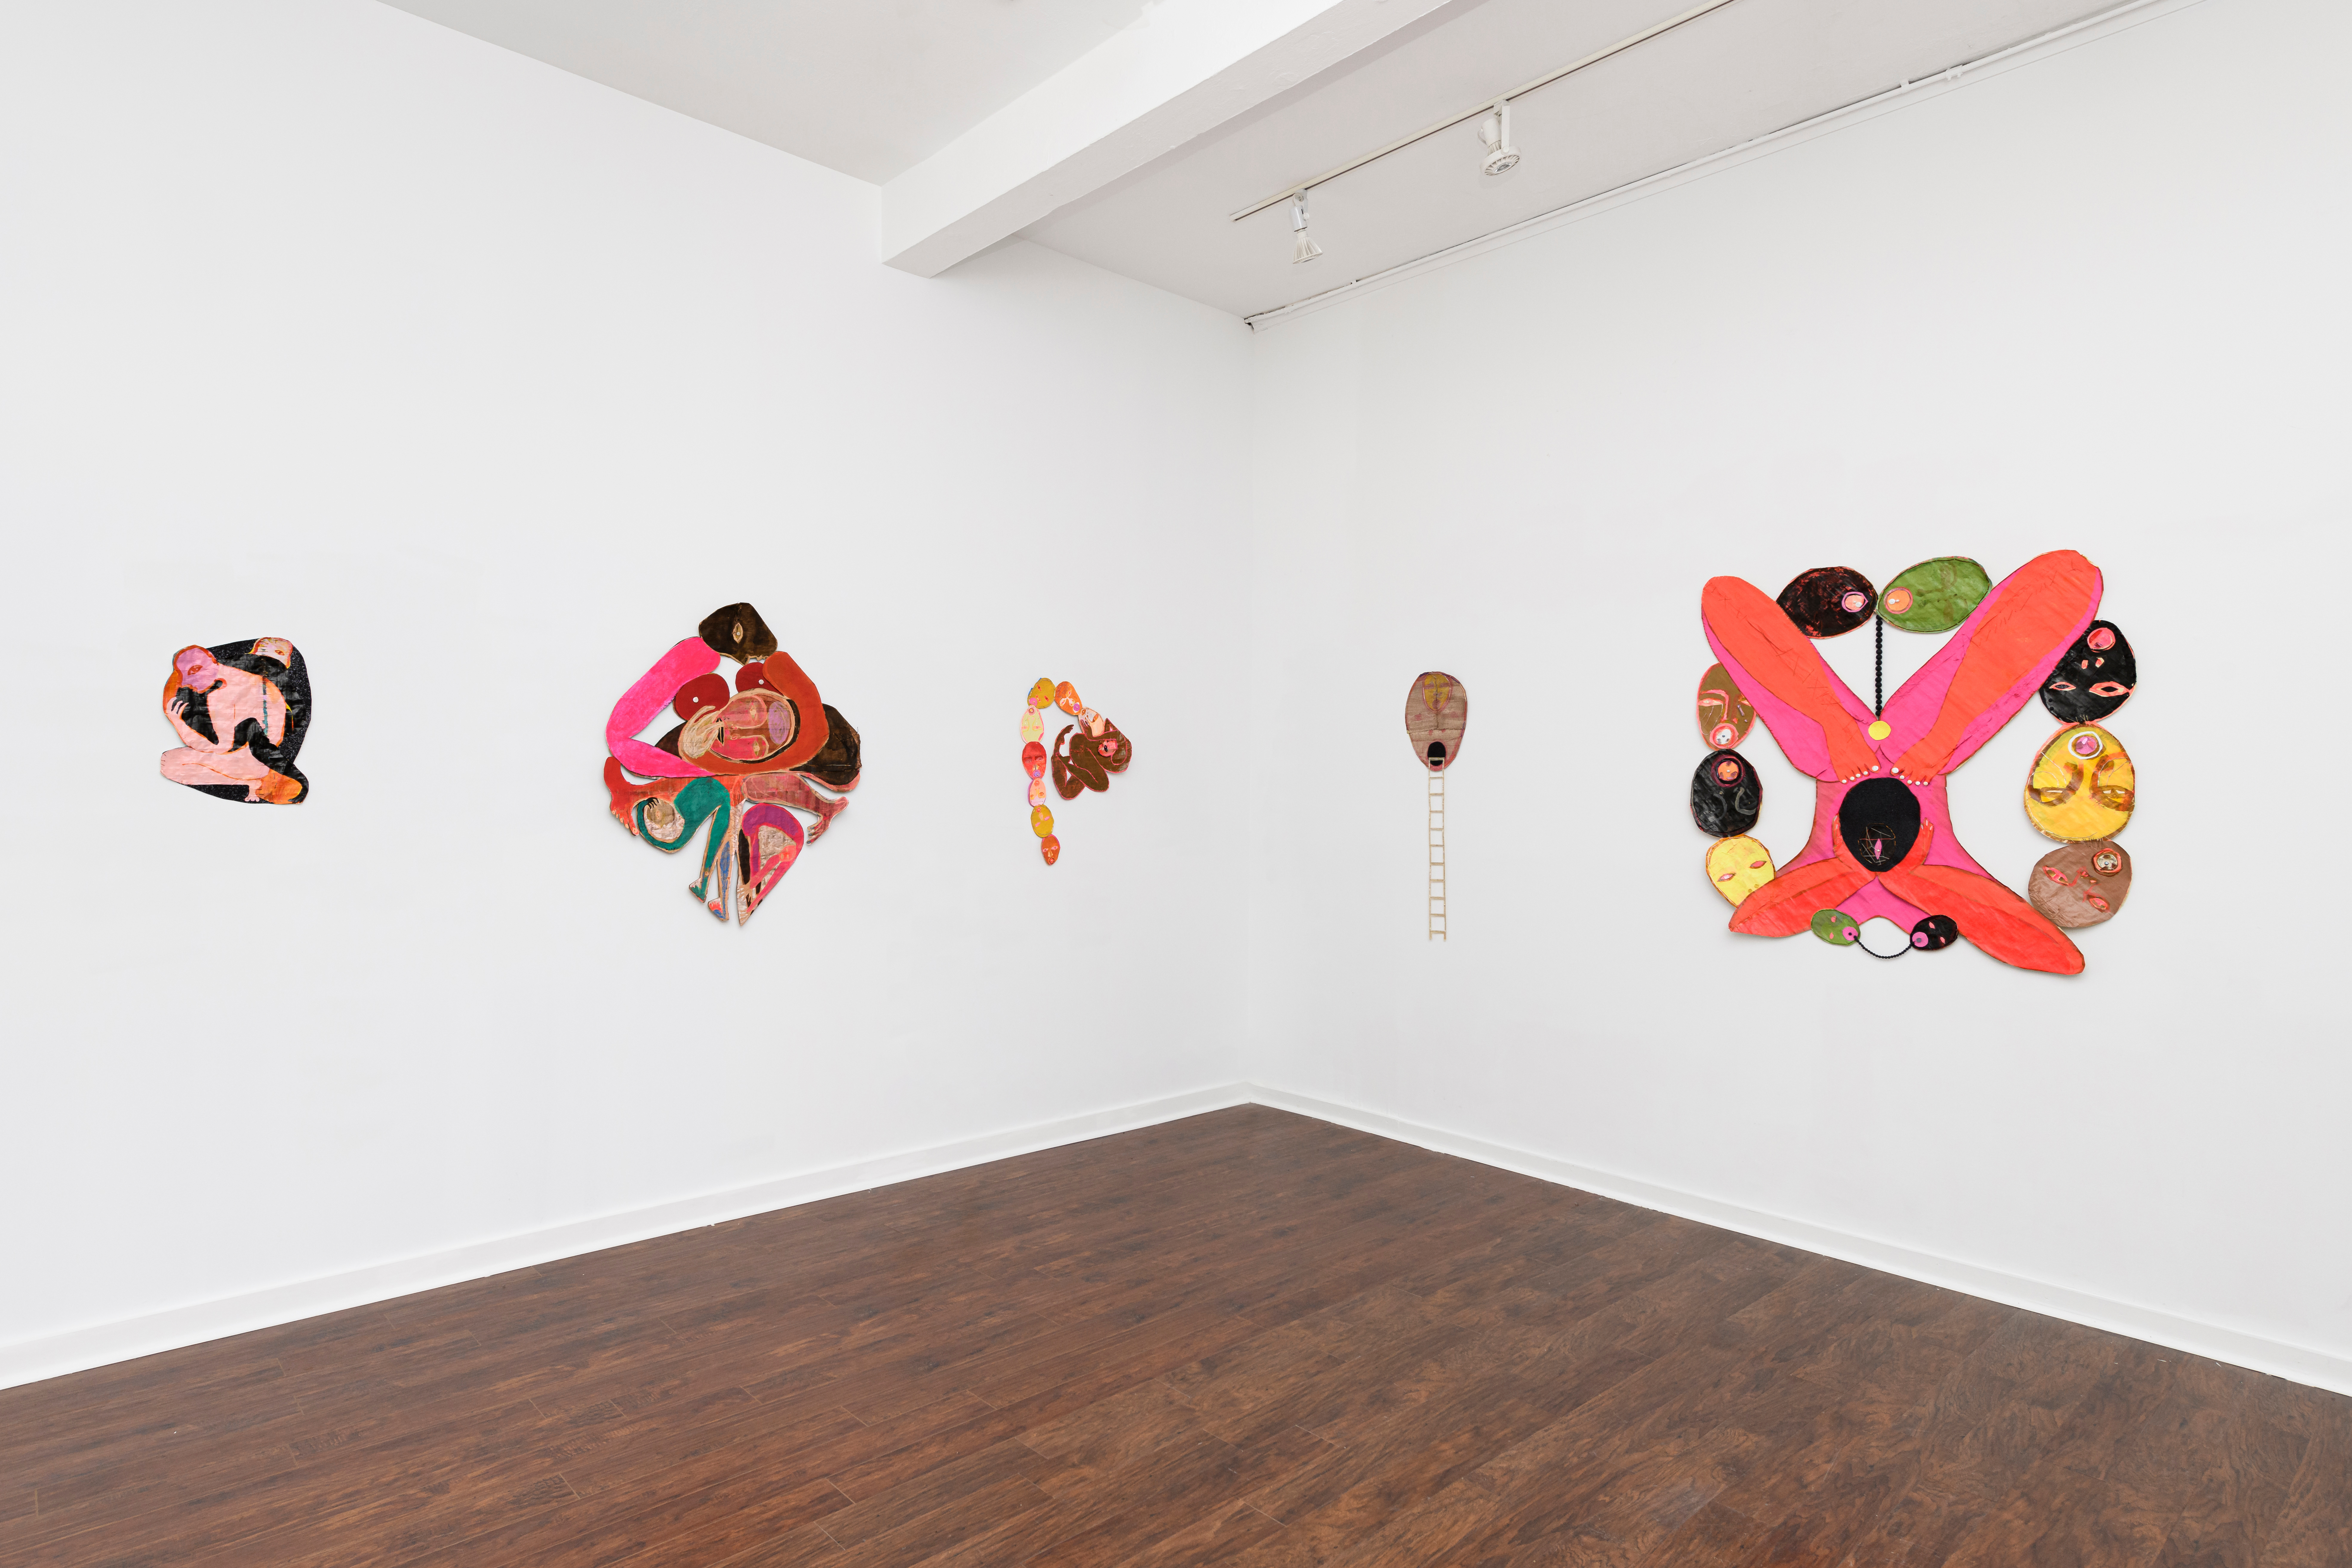 Kimia Ferdowsi Kline, installation view from "Mother Tongue" at Marrow Gallery (San Francisco, CA), 2021